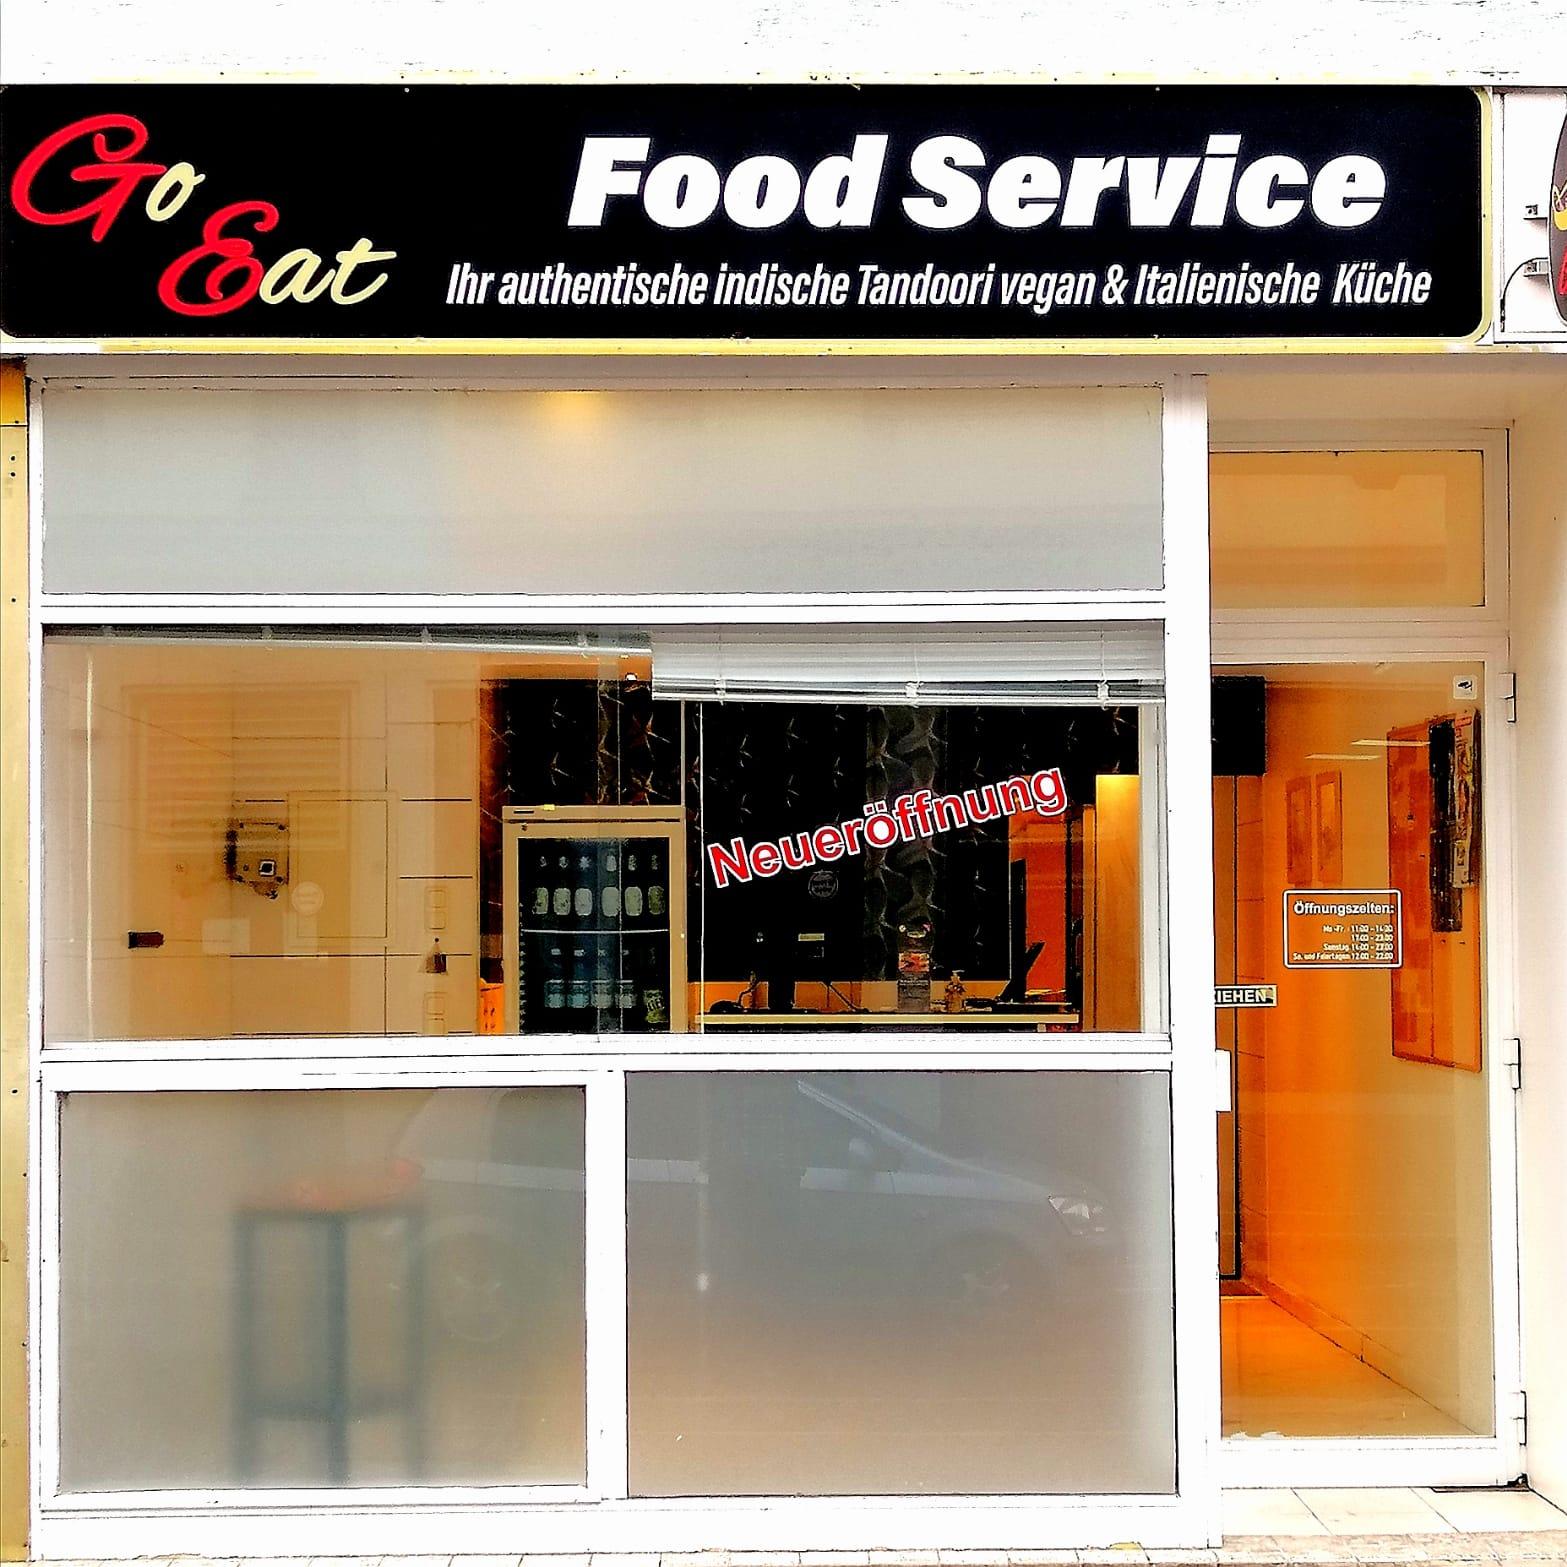 Restaurant "GO EAT FOOD SERVICE" in Frankfurt am Main